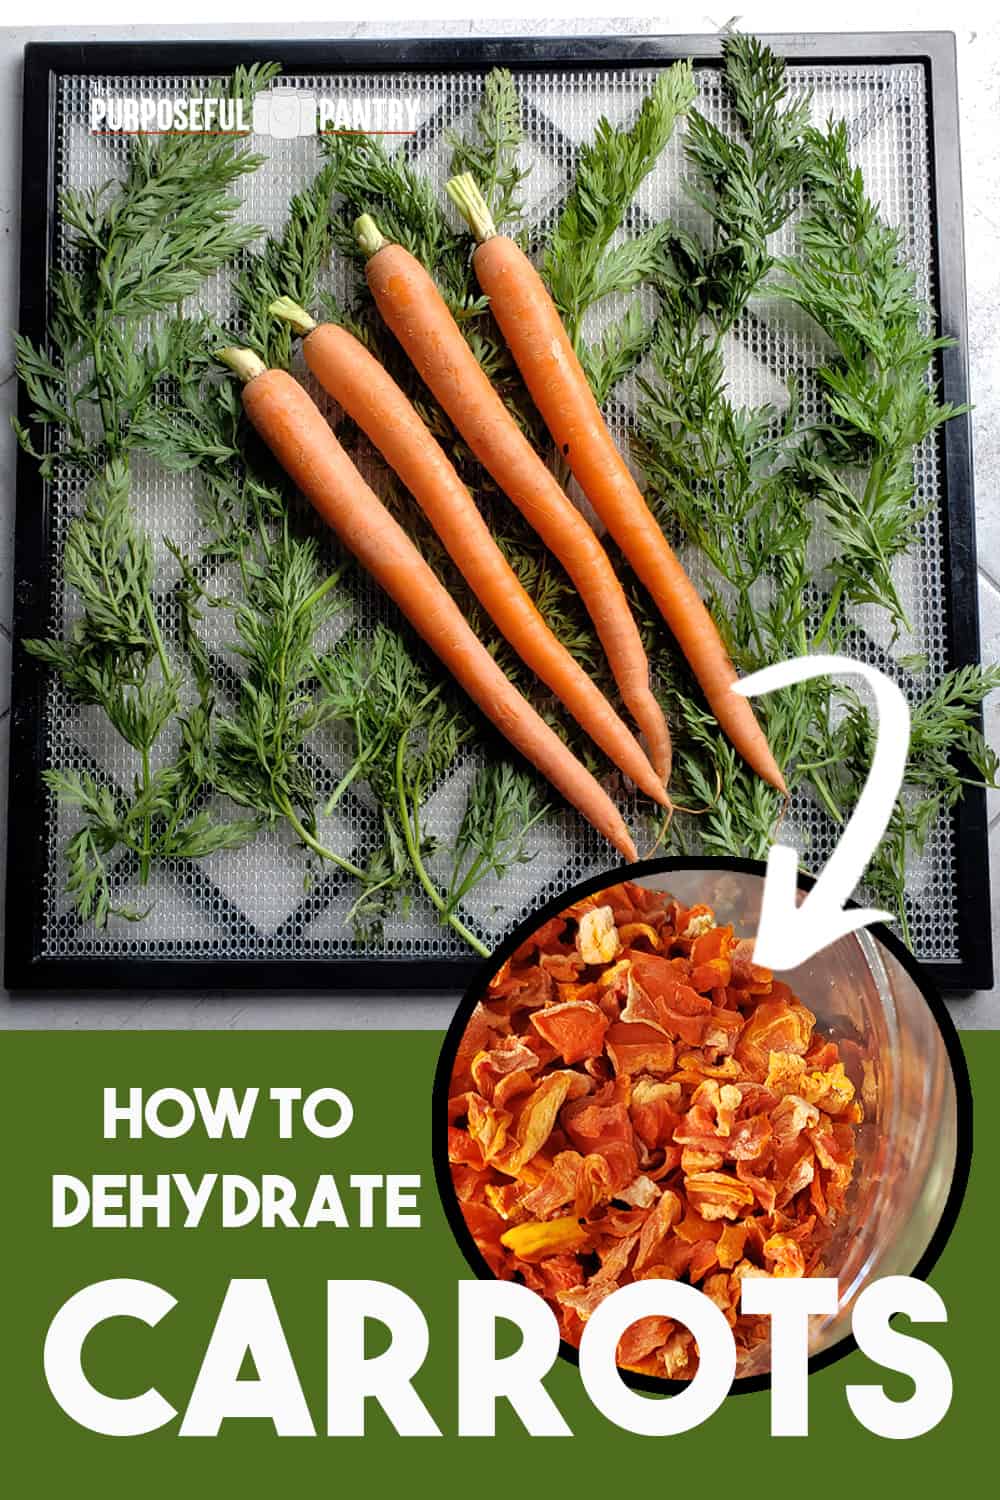 Dehydrating carrots!